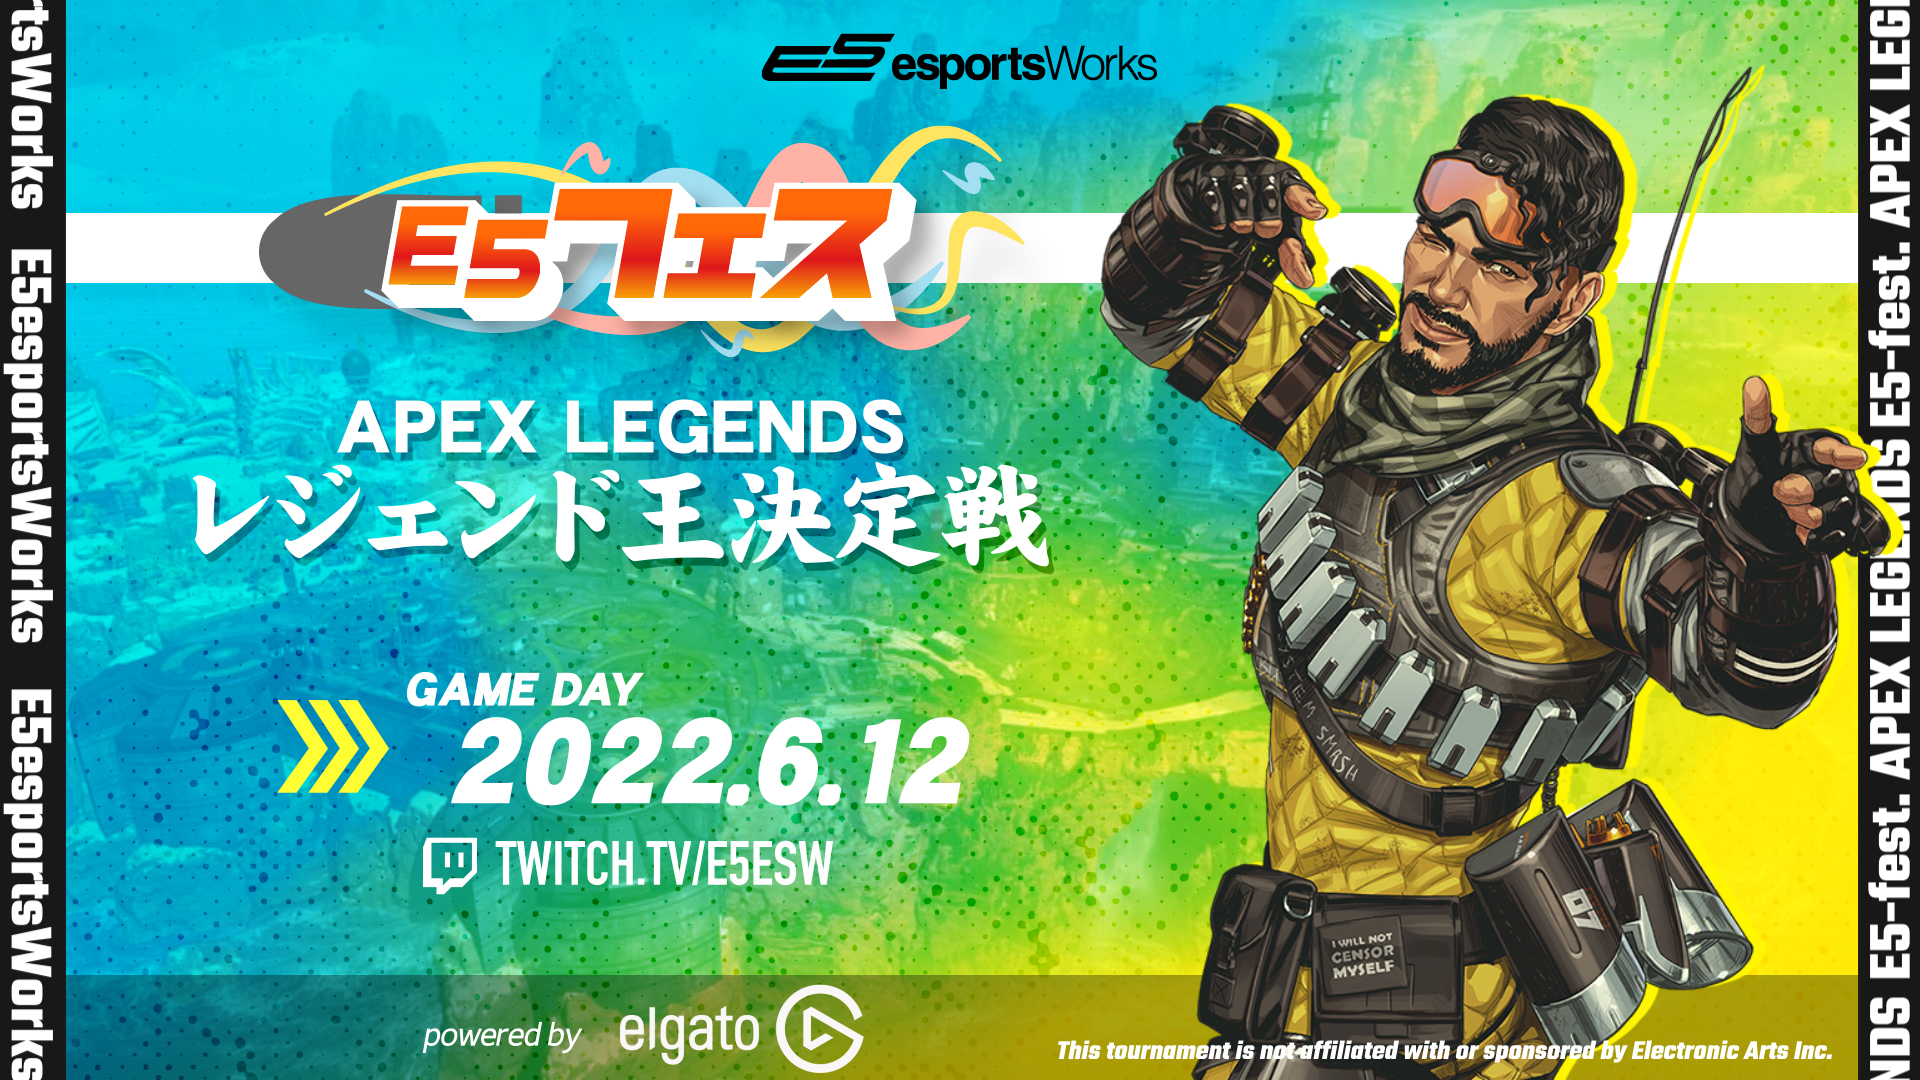 「E5フェス Apex Legends 第2回 レジェンド王決定戦 powered by Elgato」開催